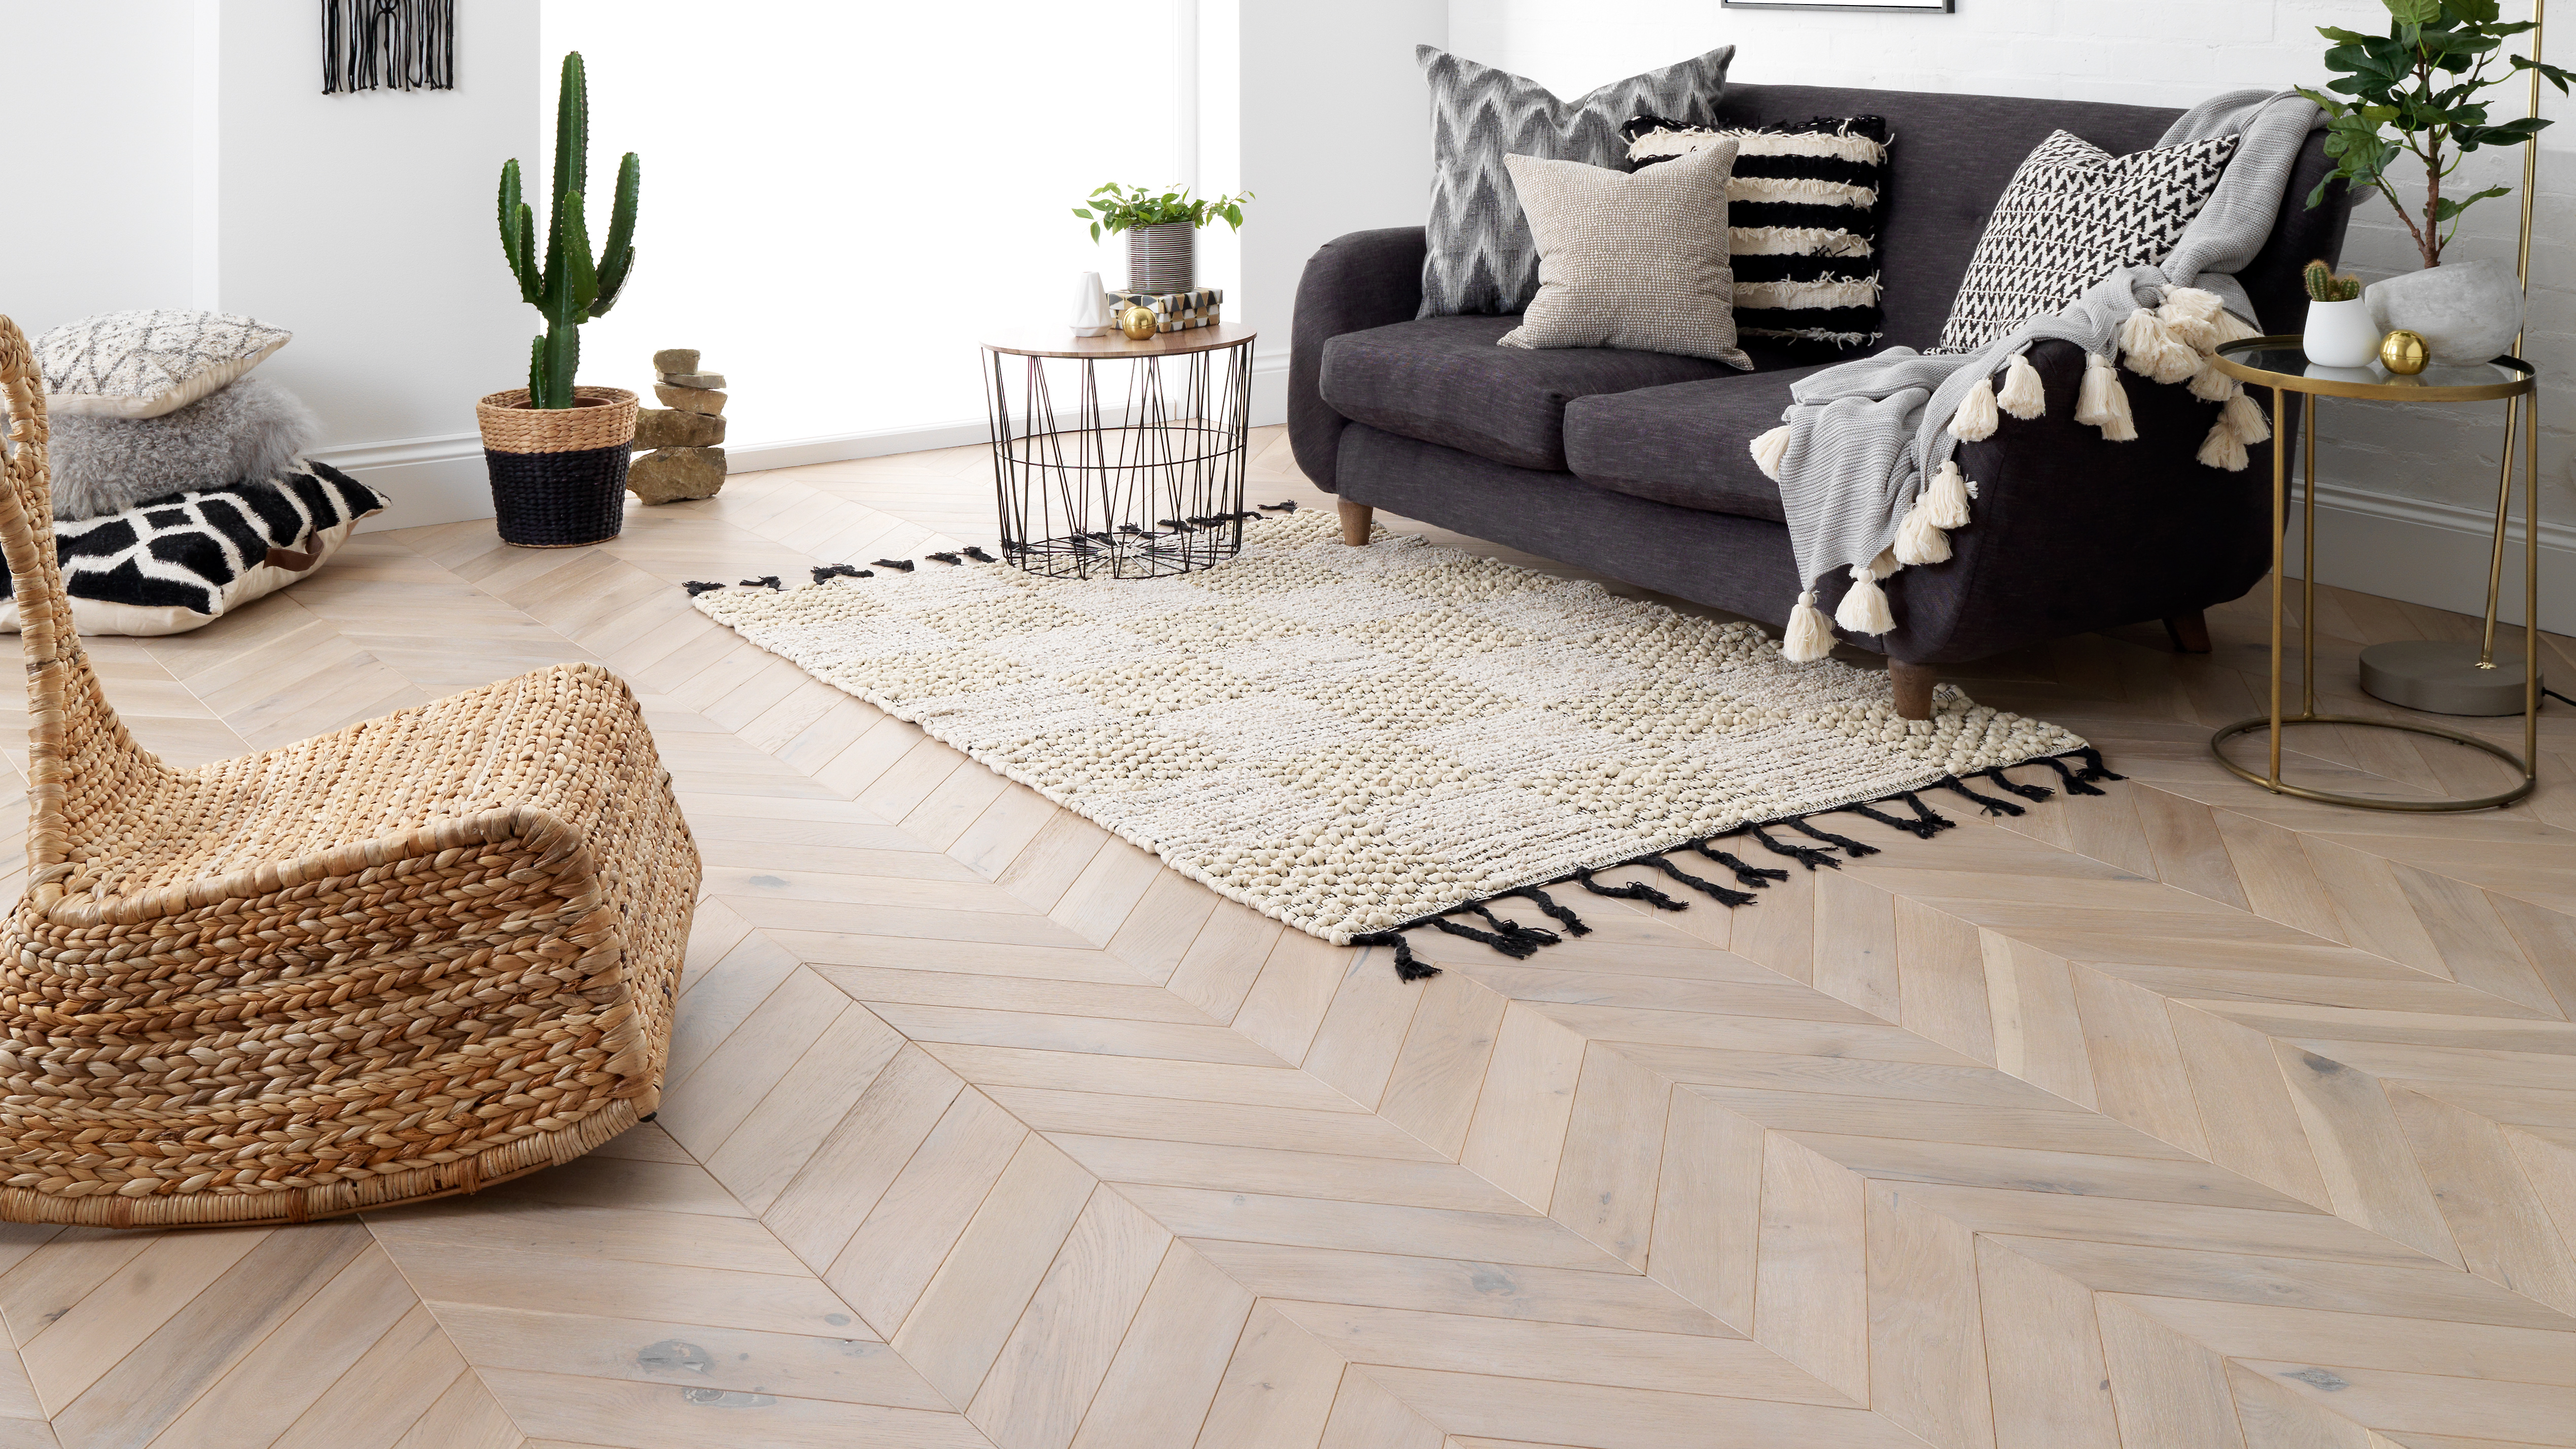 Wooden Flooring Hardwood, Is Laminate Flooring Good For Living Room